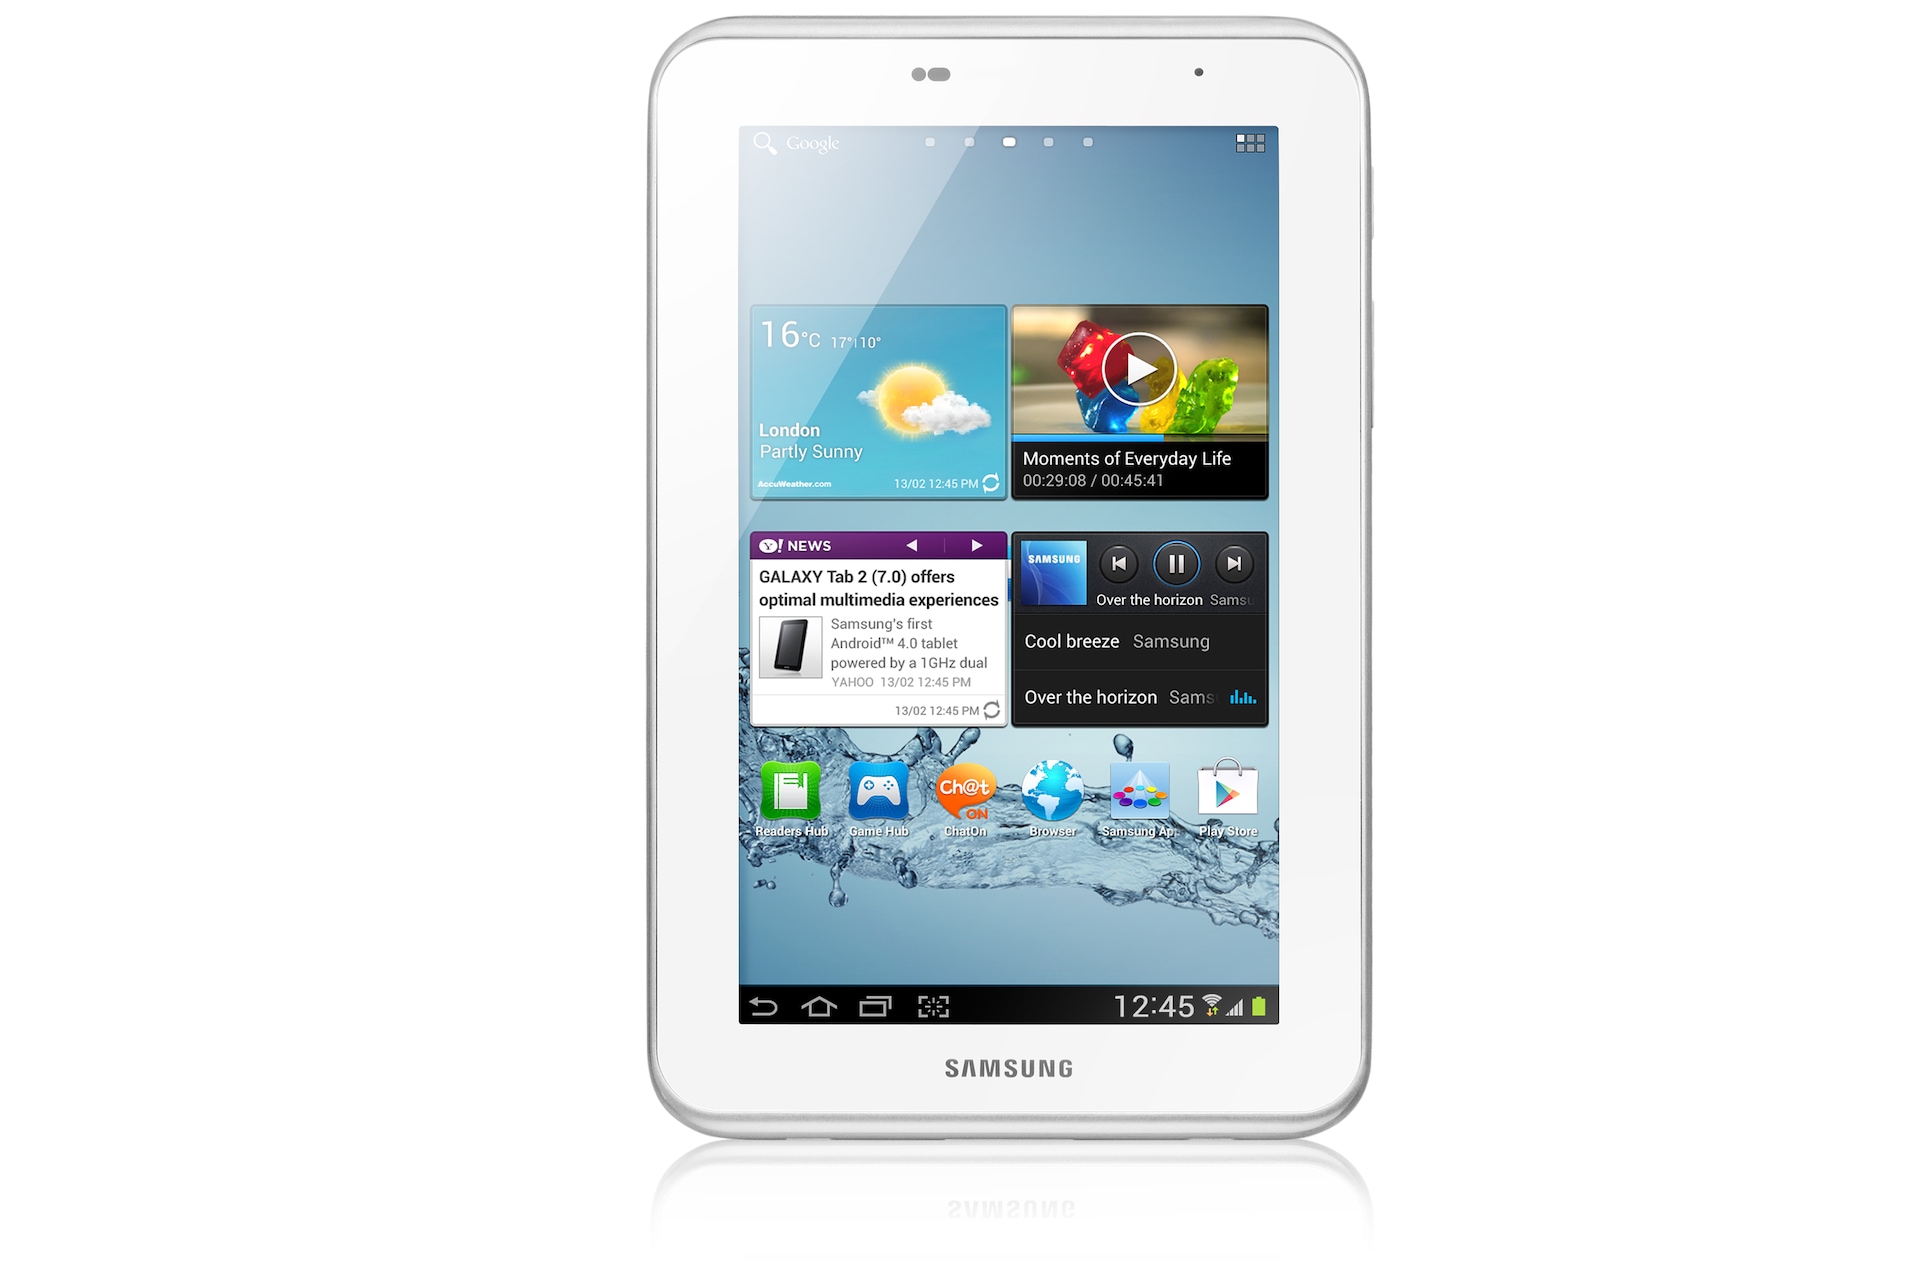 pescado motivo Mucho Samsung Galaxy Tab 2 7.0-inch - WiFi - Android 4.0 | Samsung IE